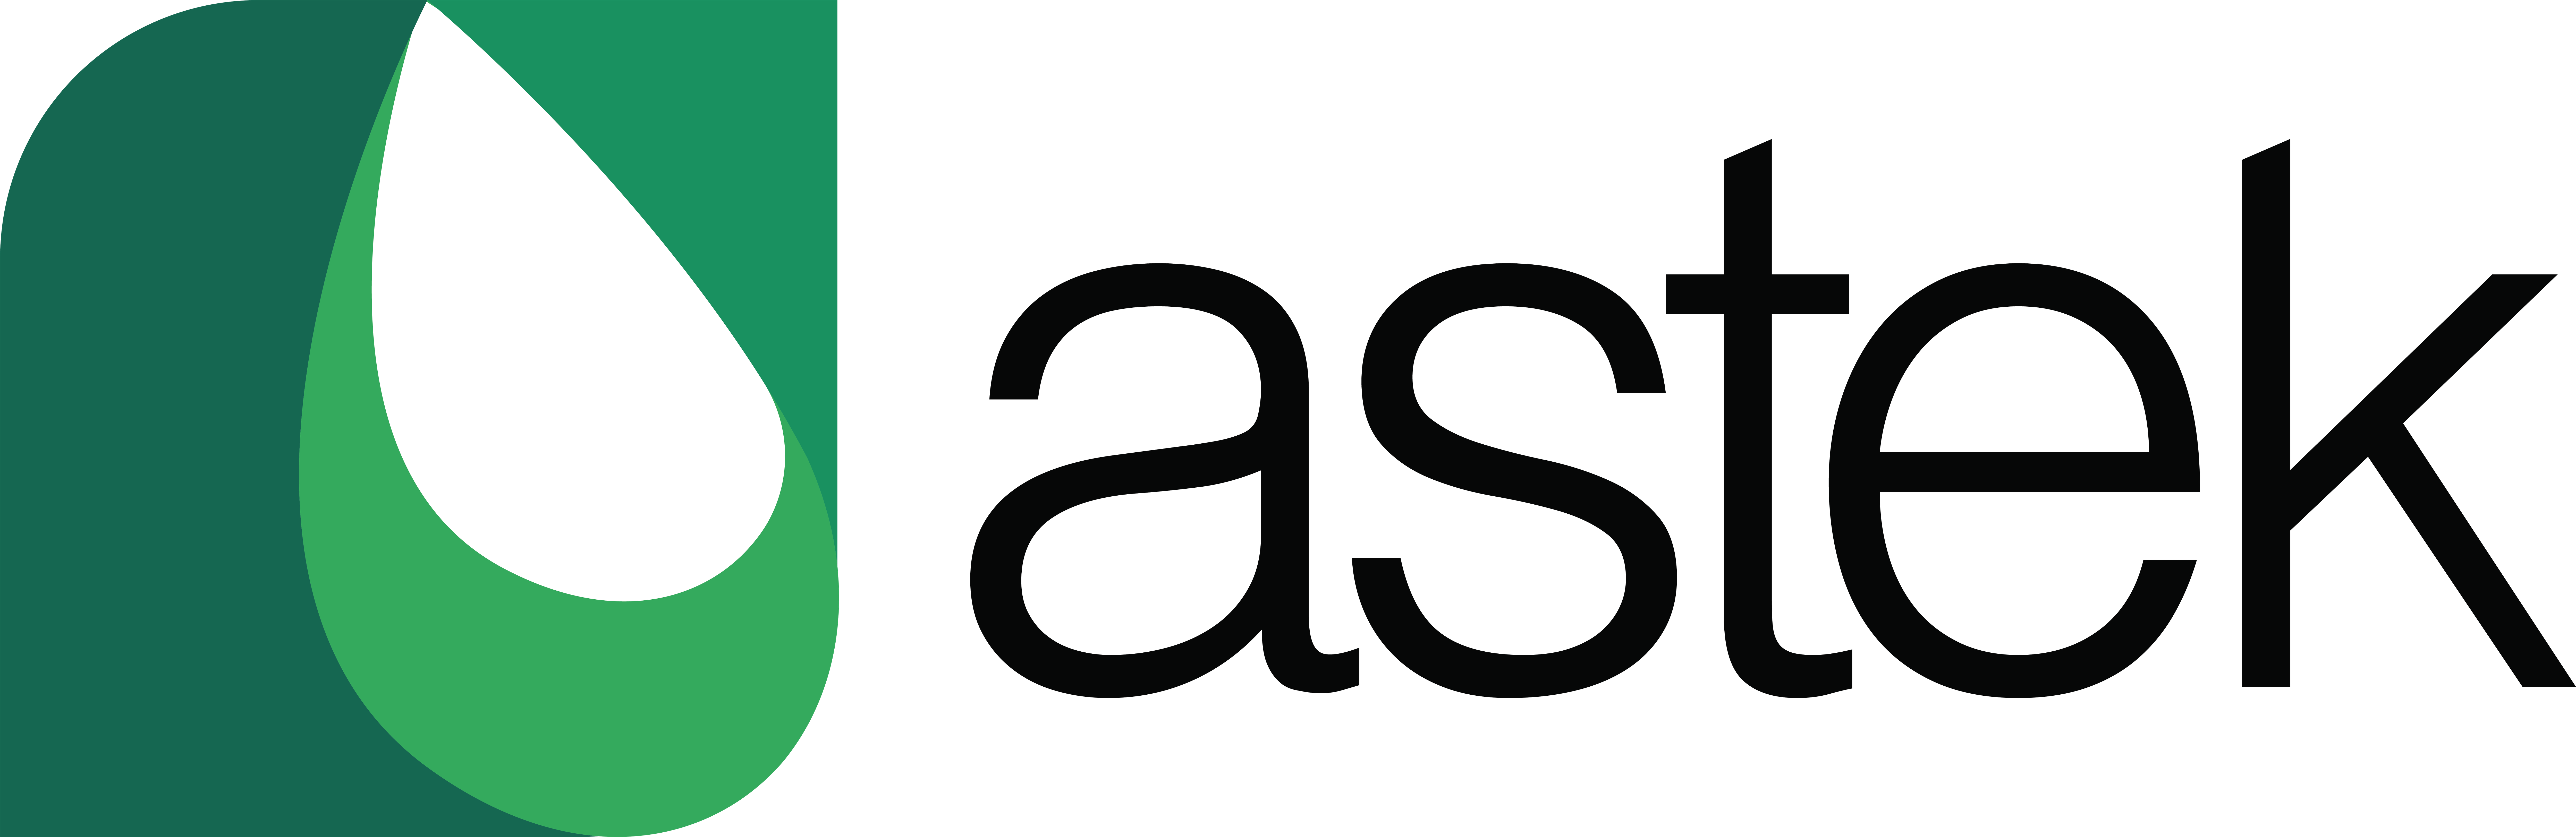 Astek logo